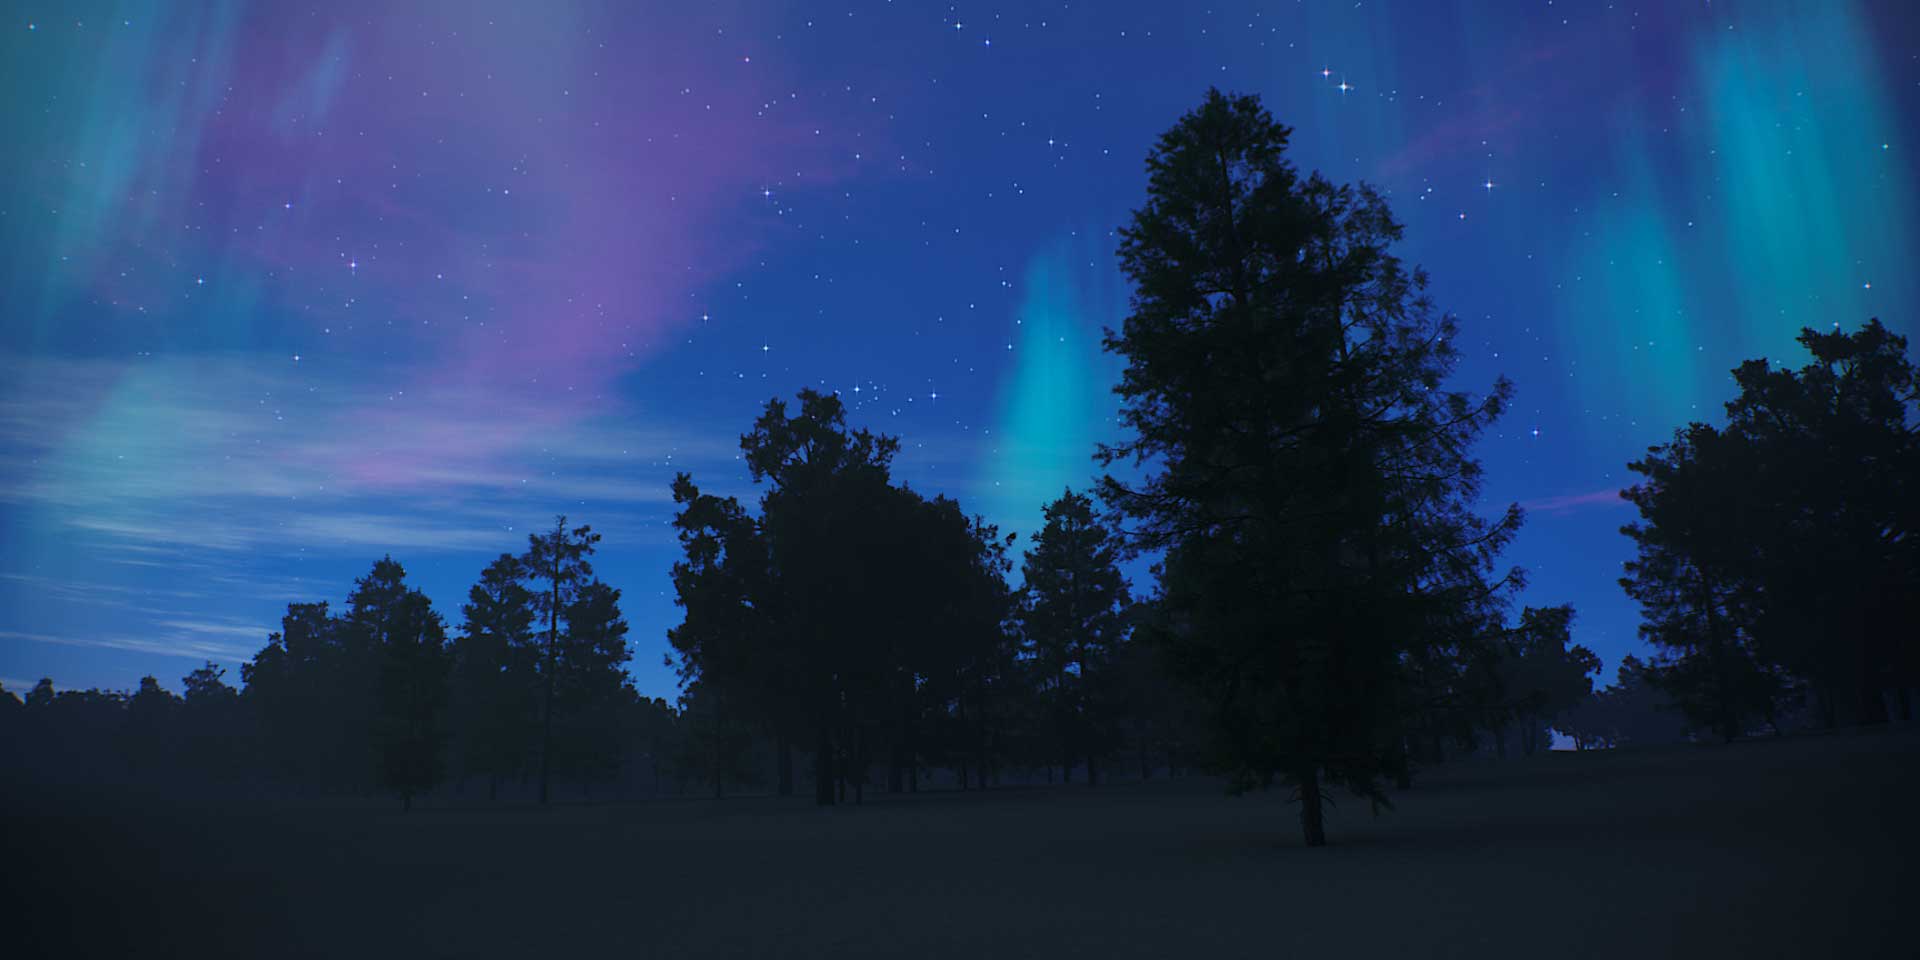 CG HDRI / Alien Skies from helloluxx by Shawn Astrom